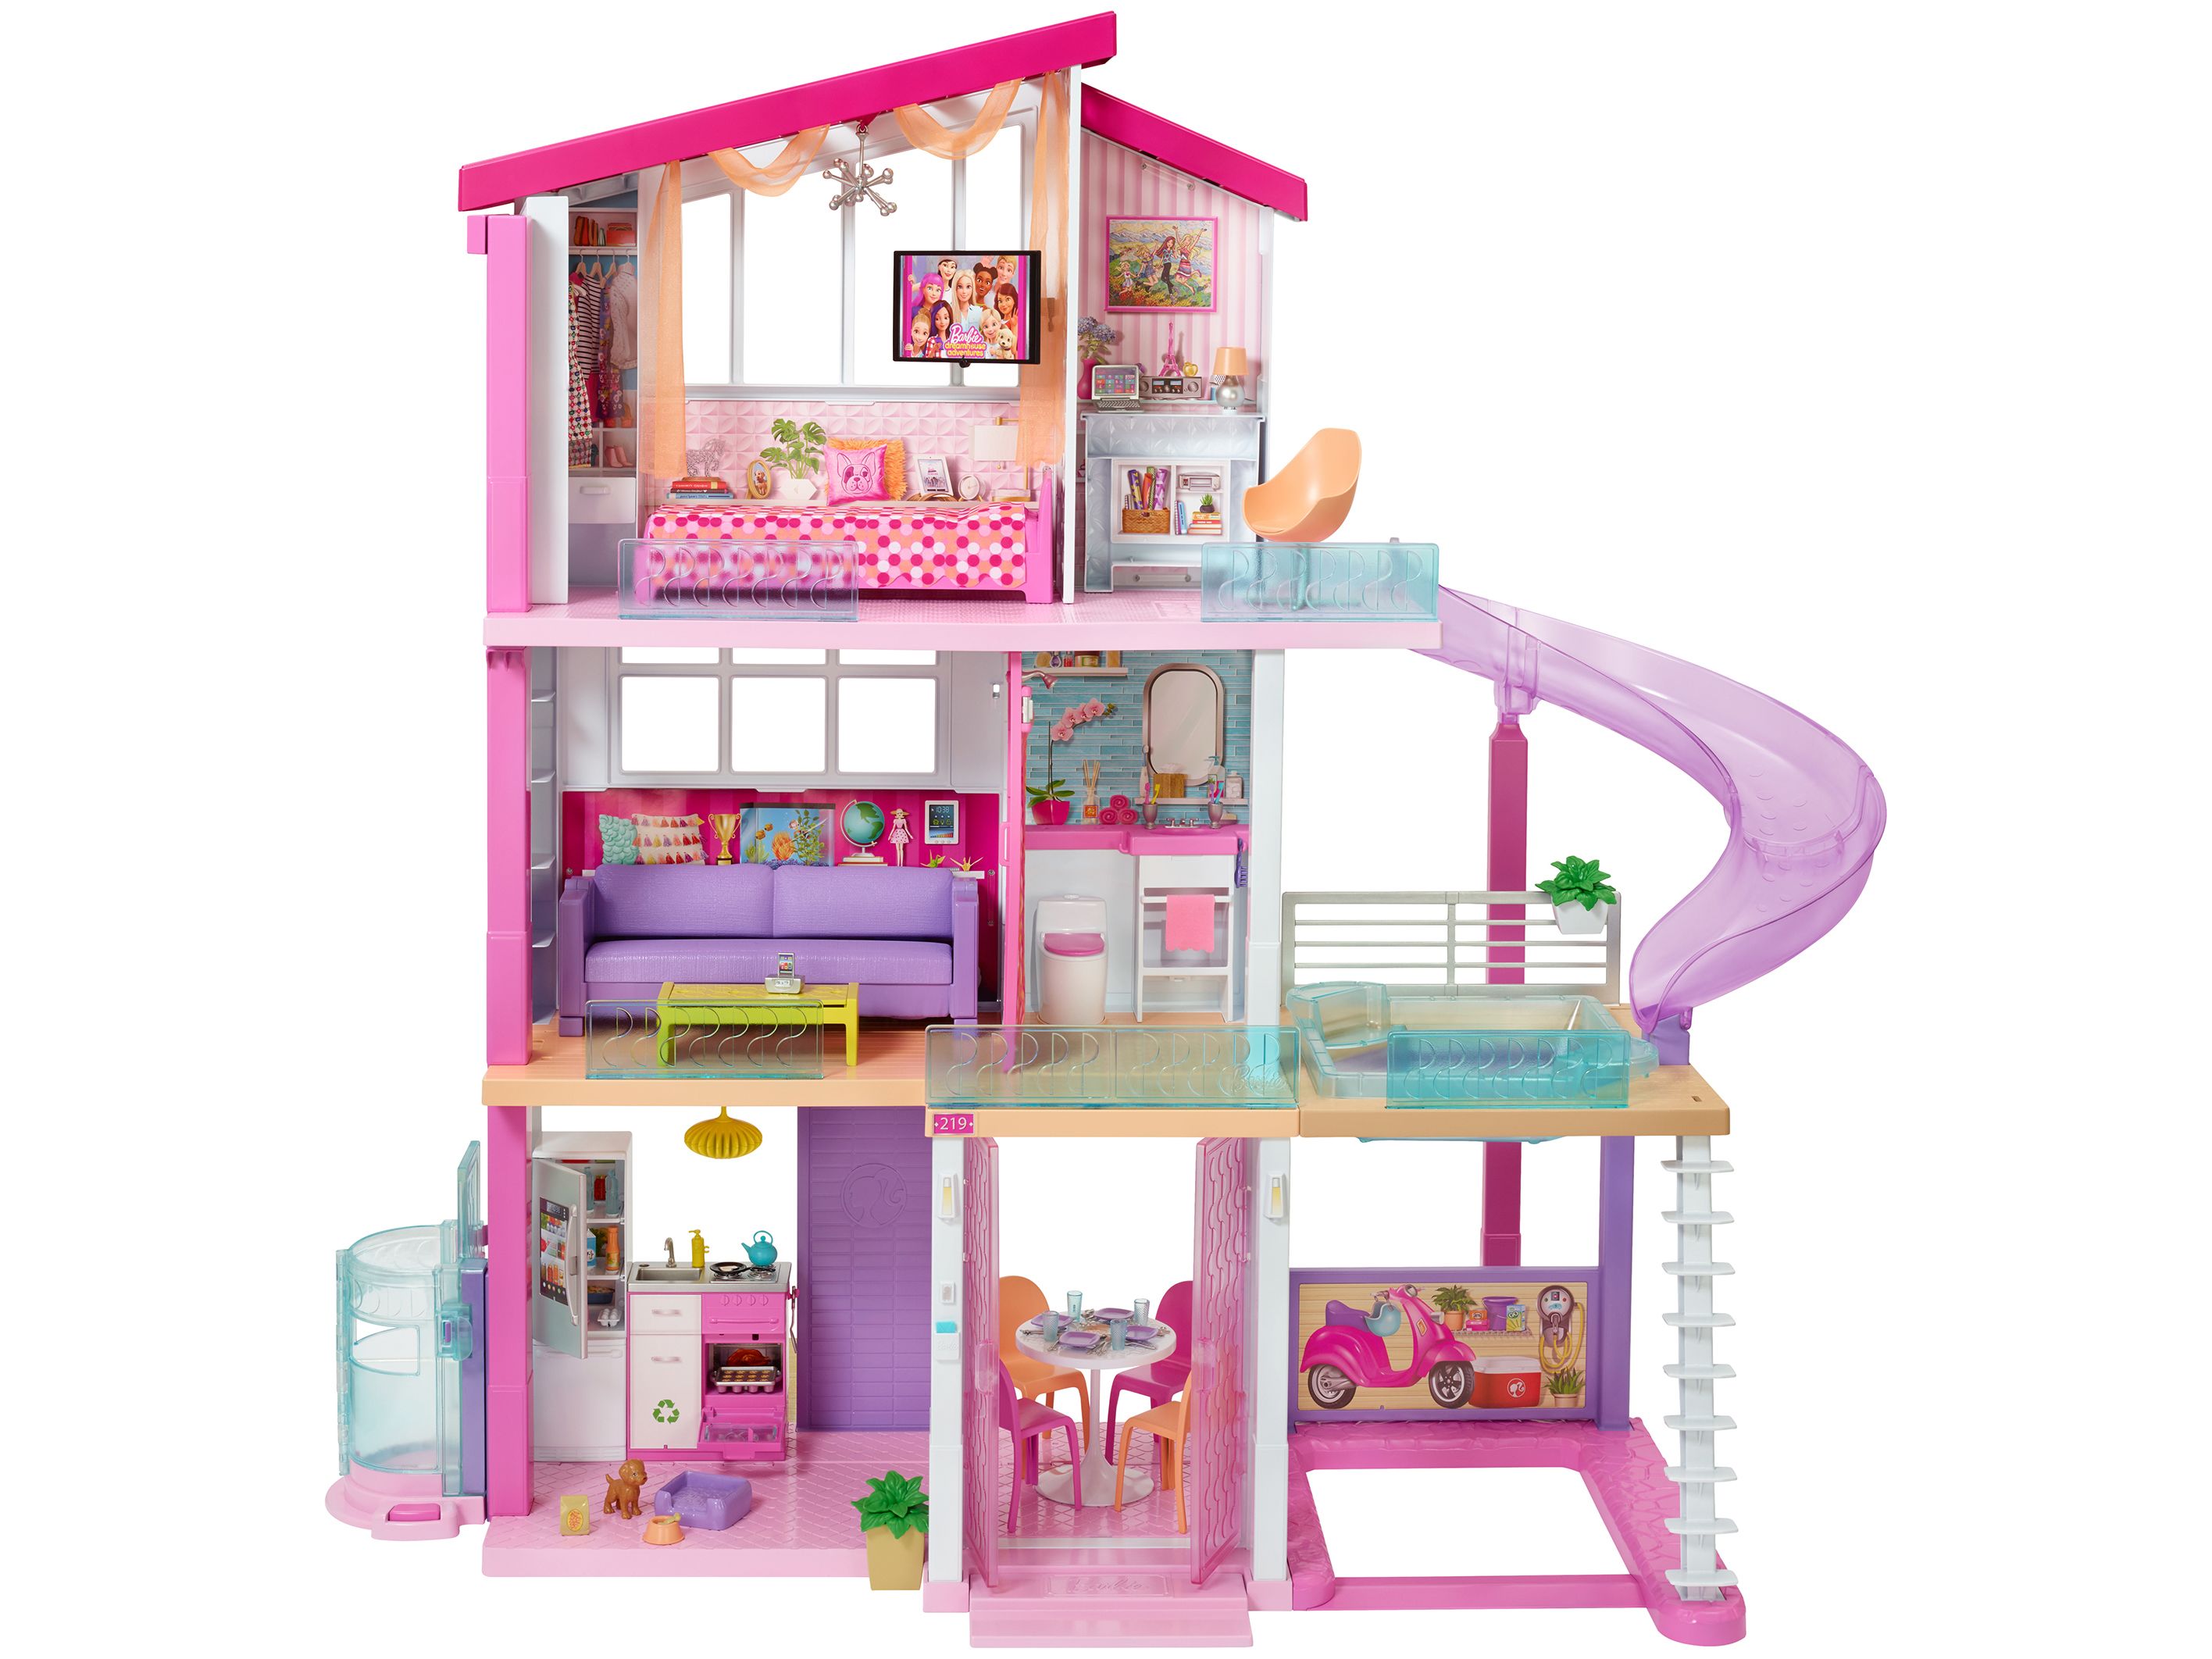 can rent Barbie's Malibu Dreamhouse for $60 per night | CNN